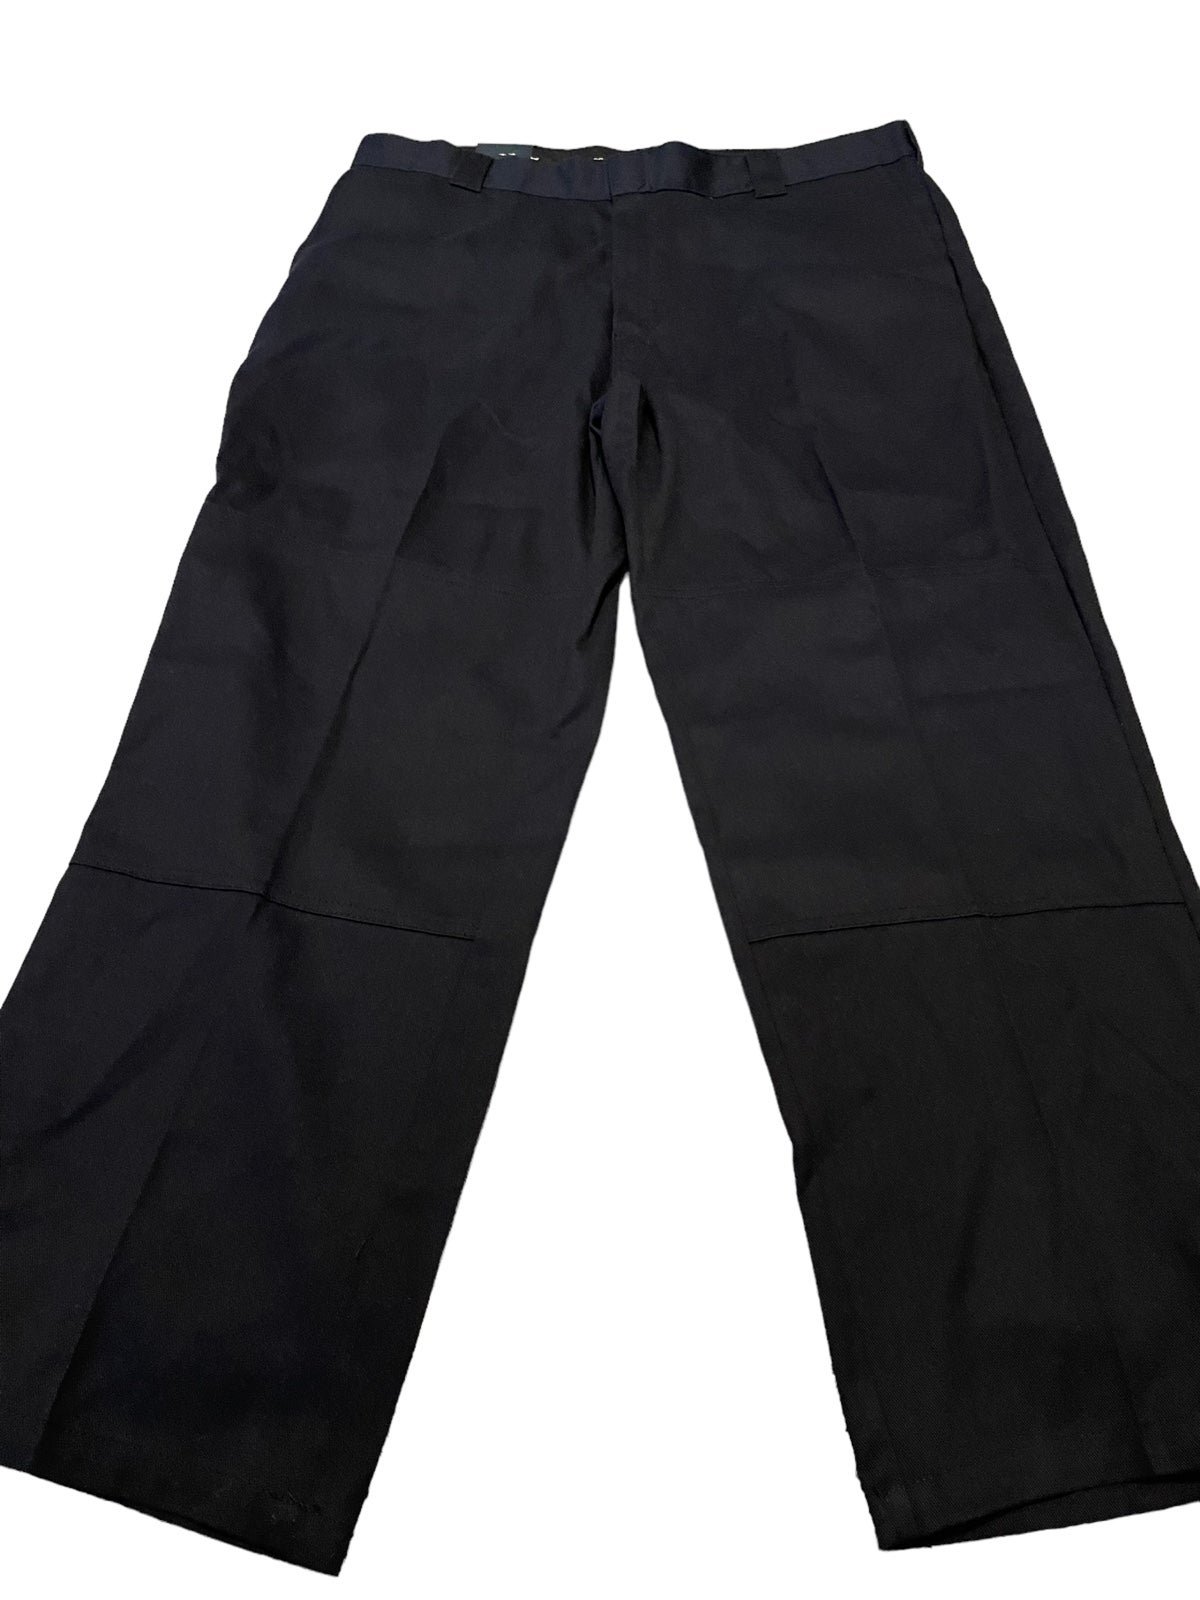 good price Men’s pants size 40x30 dickies GYWmIsdjI best sale